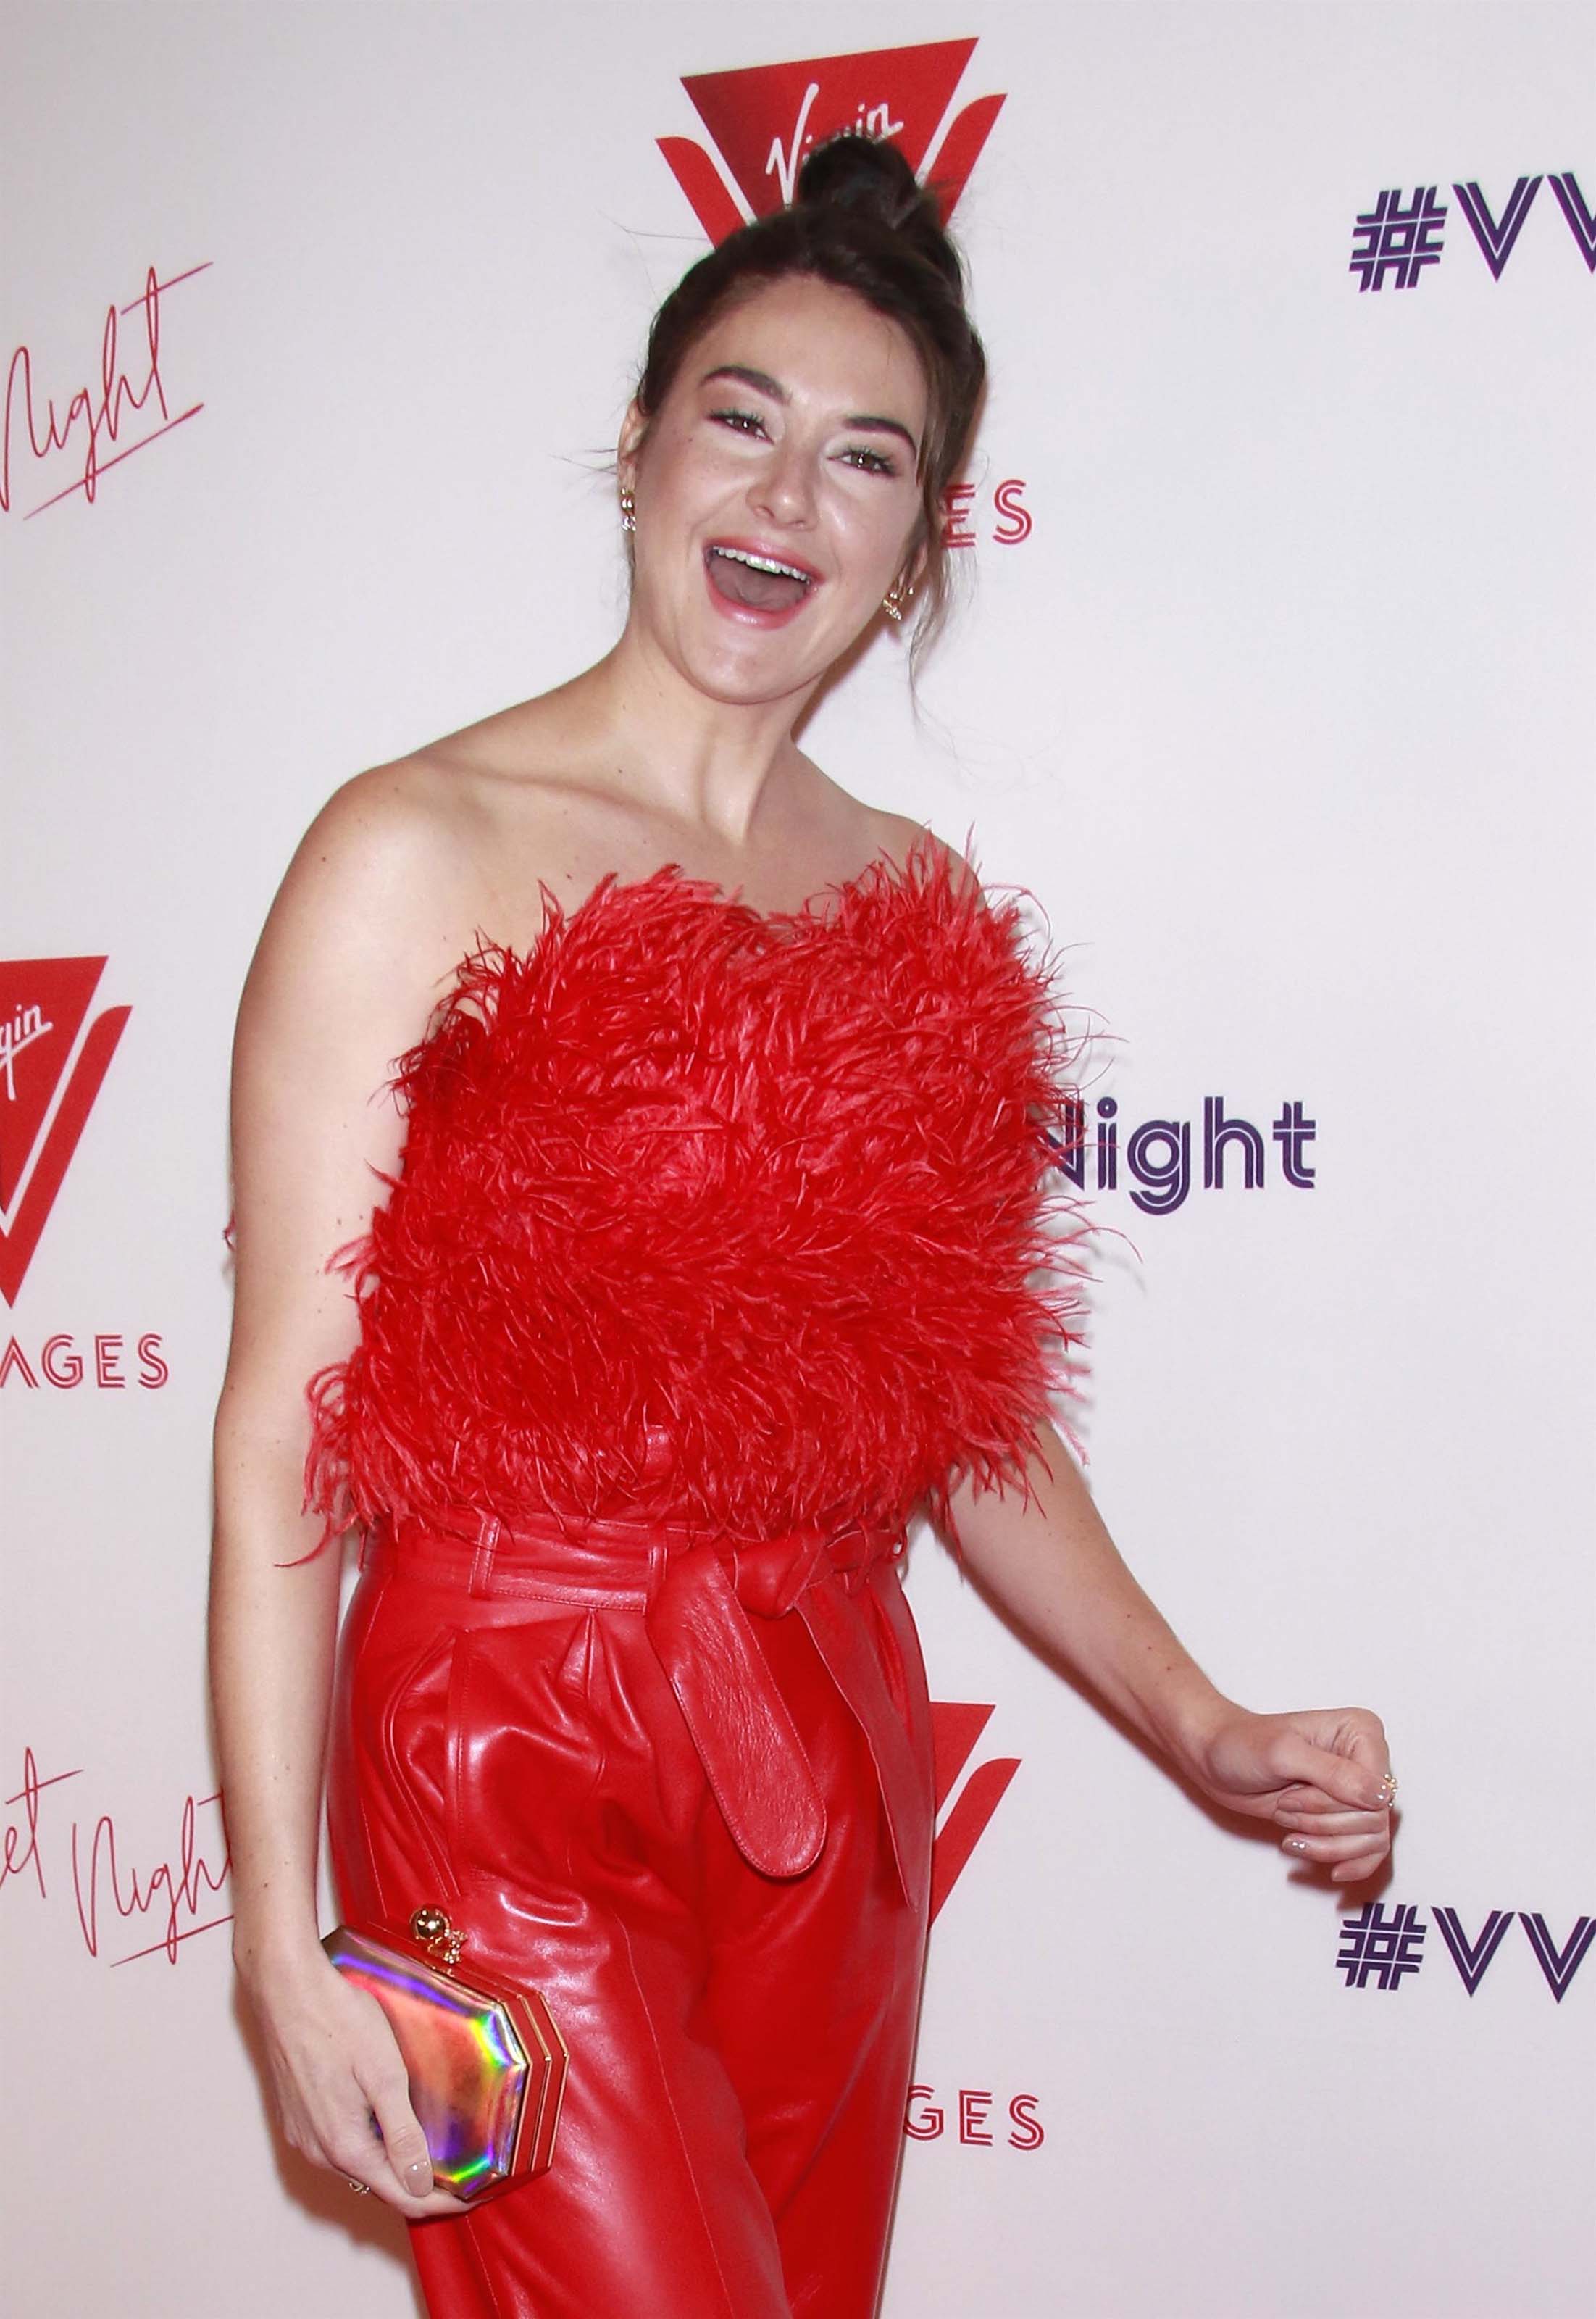 Shailene Woodley attends Virgin Voyages Scarlet Night Celebration